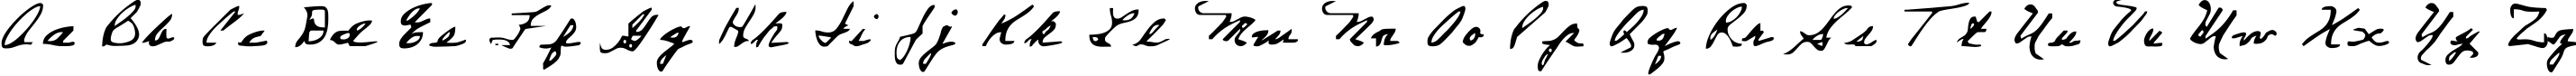 Пример написания английского алфавита шрифтом Everett Steele's Hand